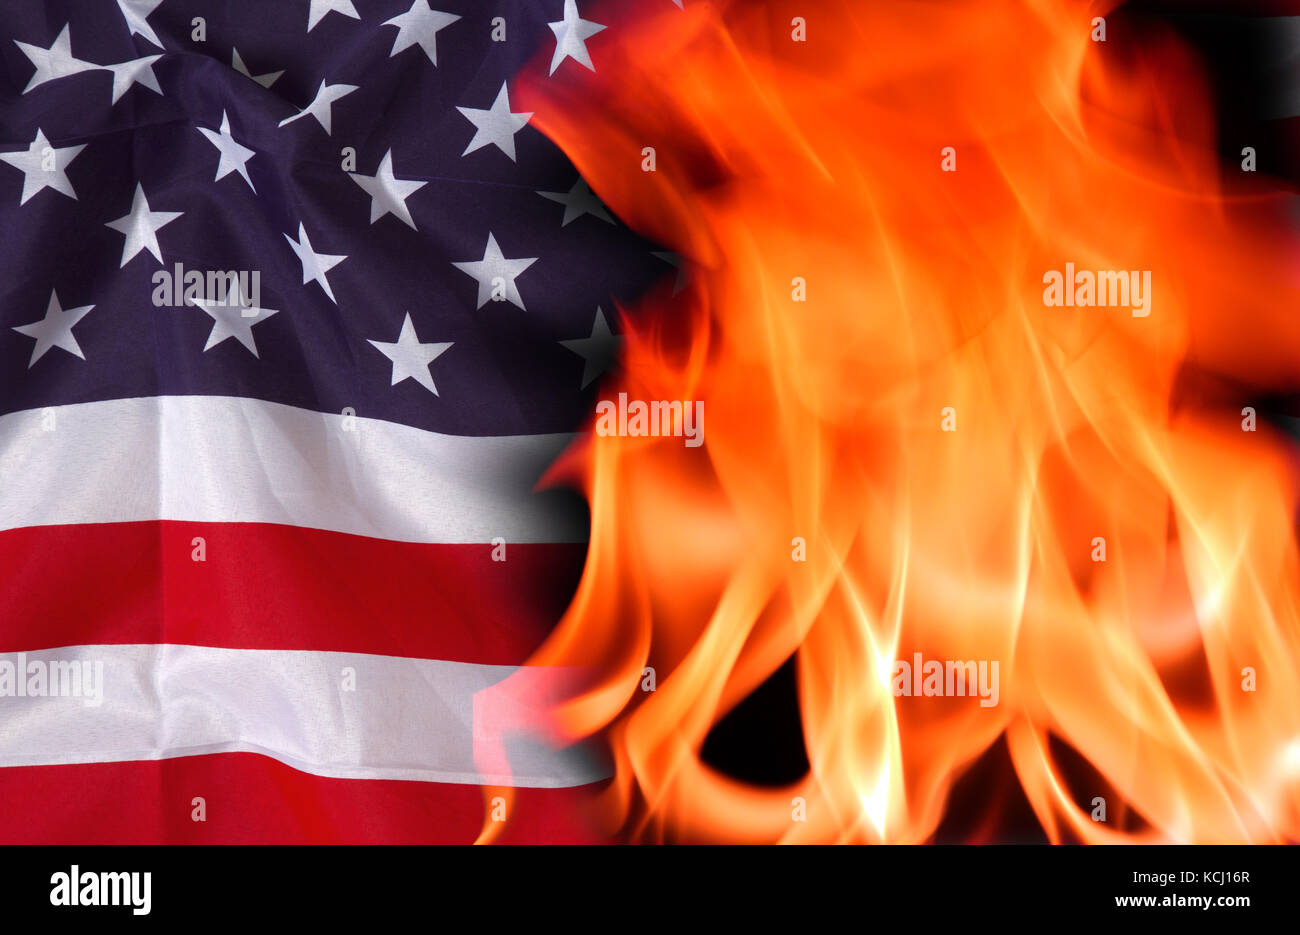 Burning American flag Stock Photo: 162665295 - Alamy